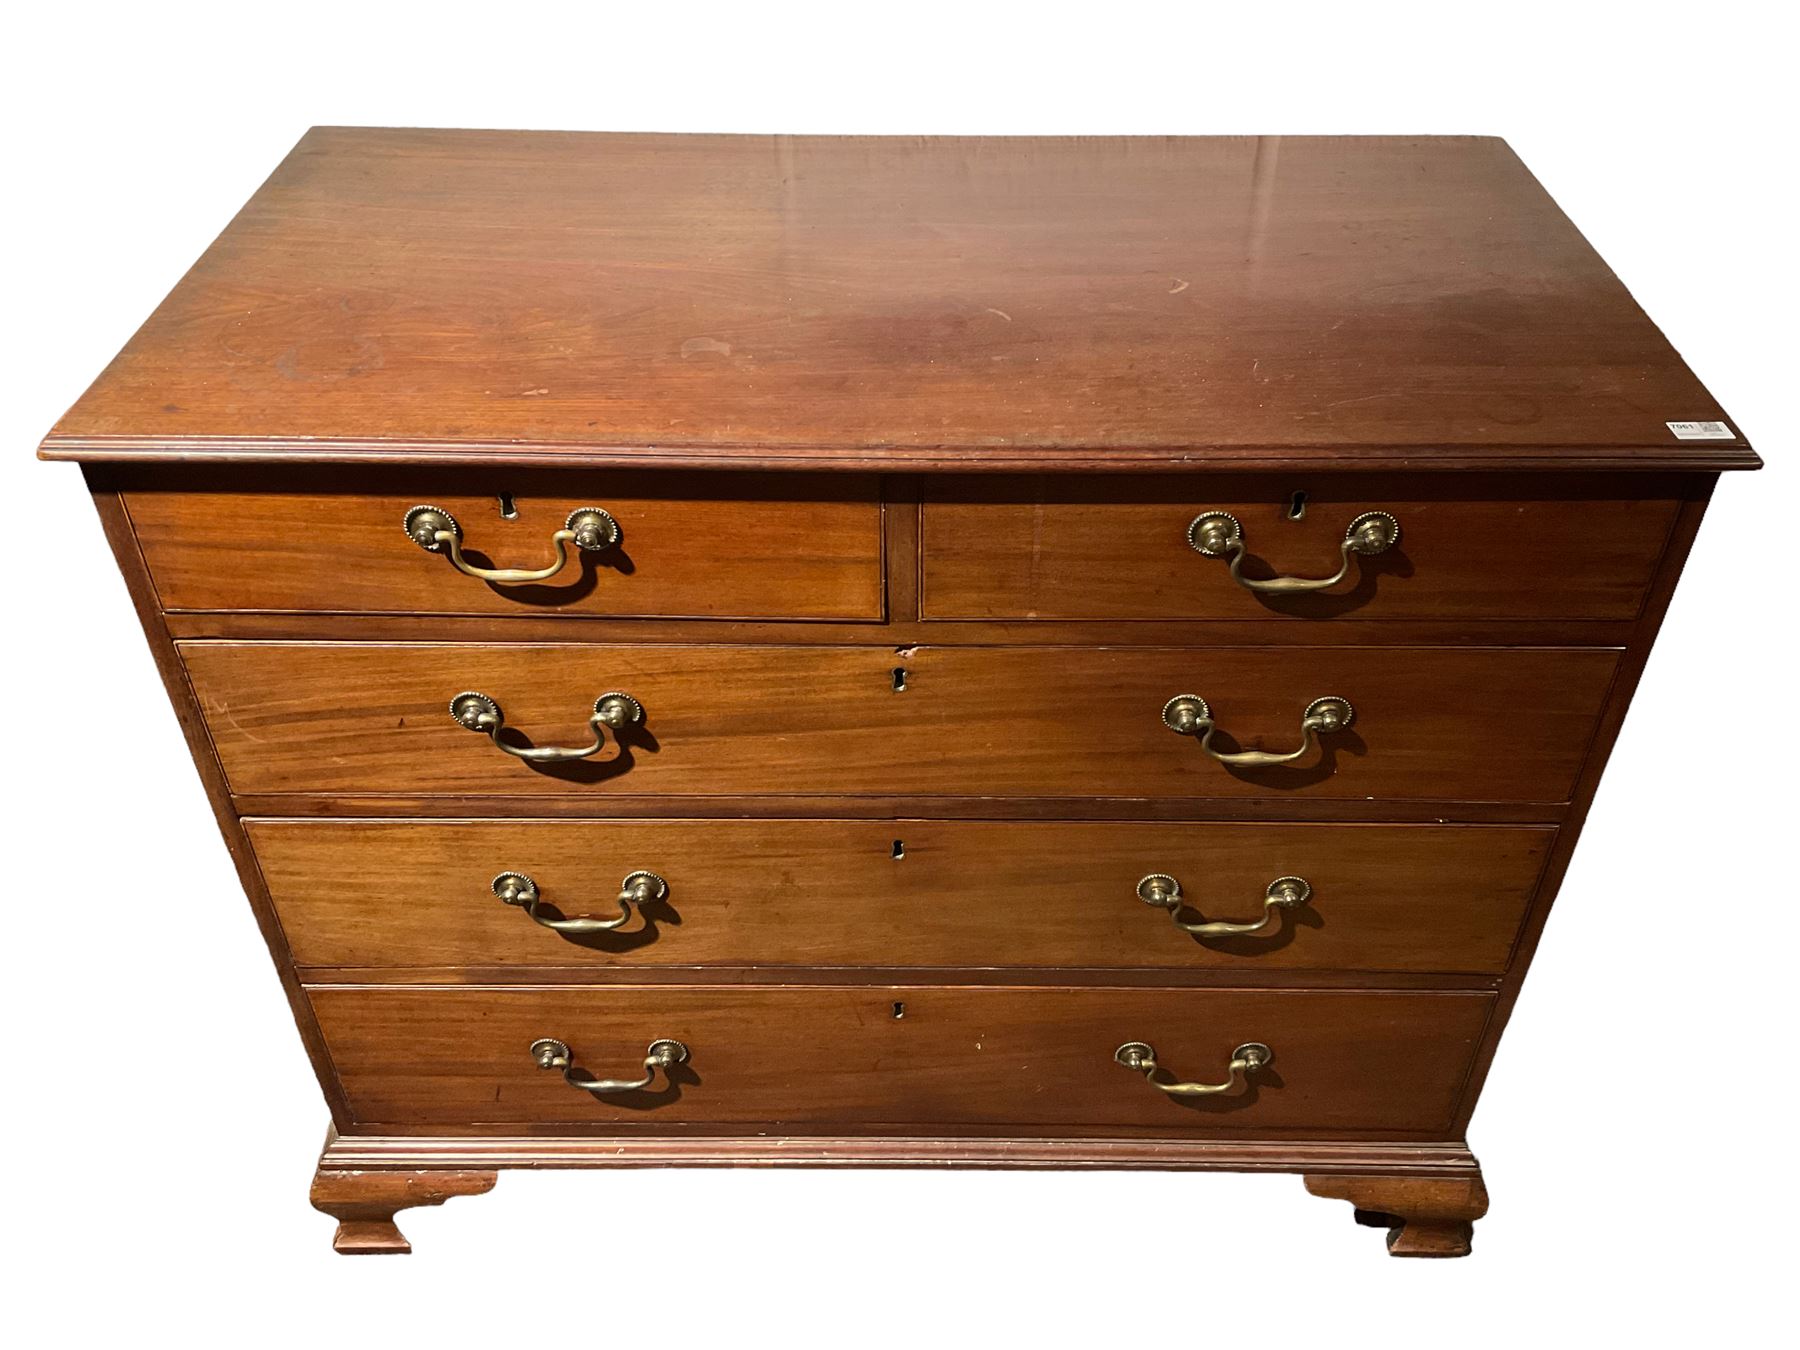 19th century mahogany chest - Image 2 of 2